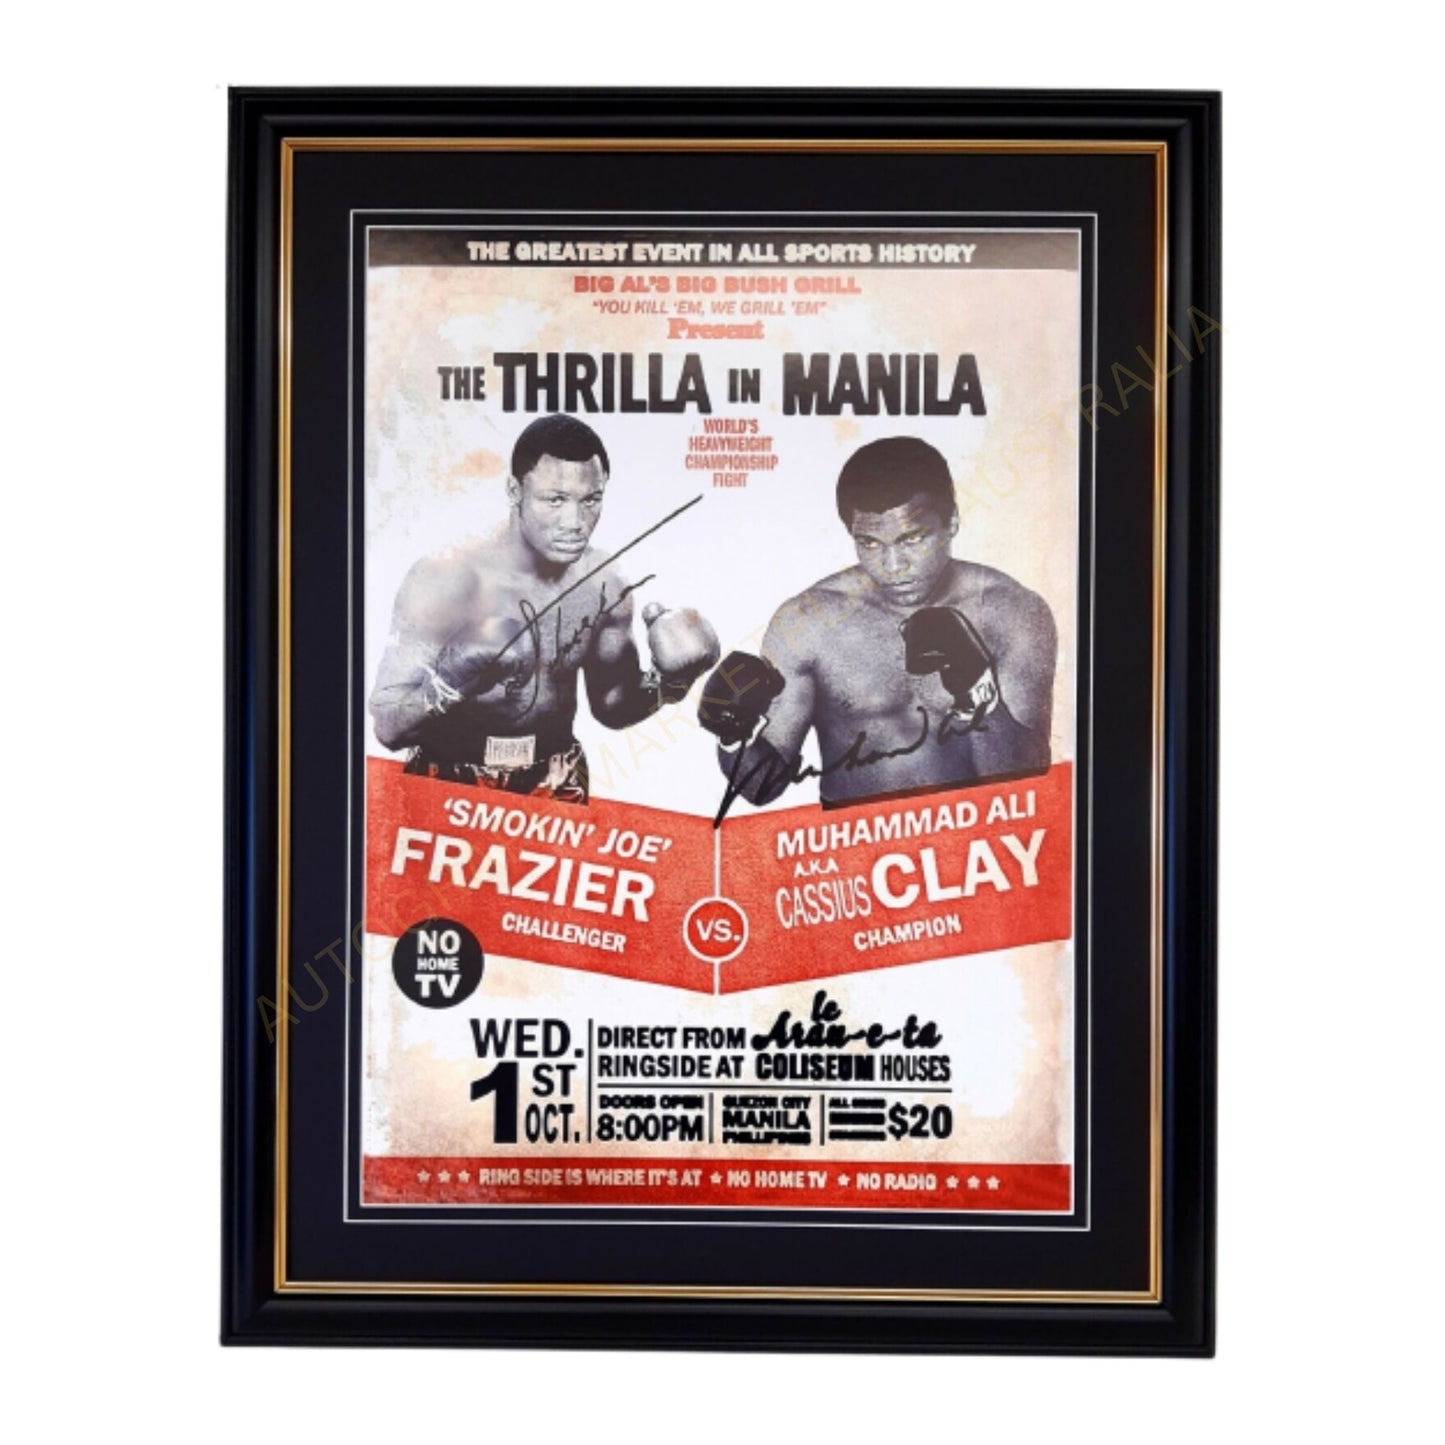 Joe Frazier Vs Muhammad Ali Thrilla In Manila Signed Framed Boxing Memorabilia